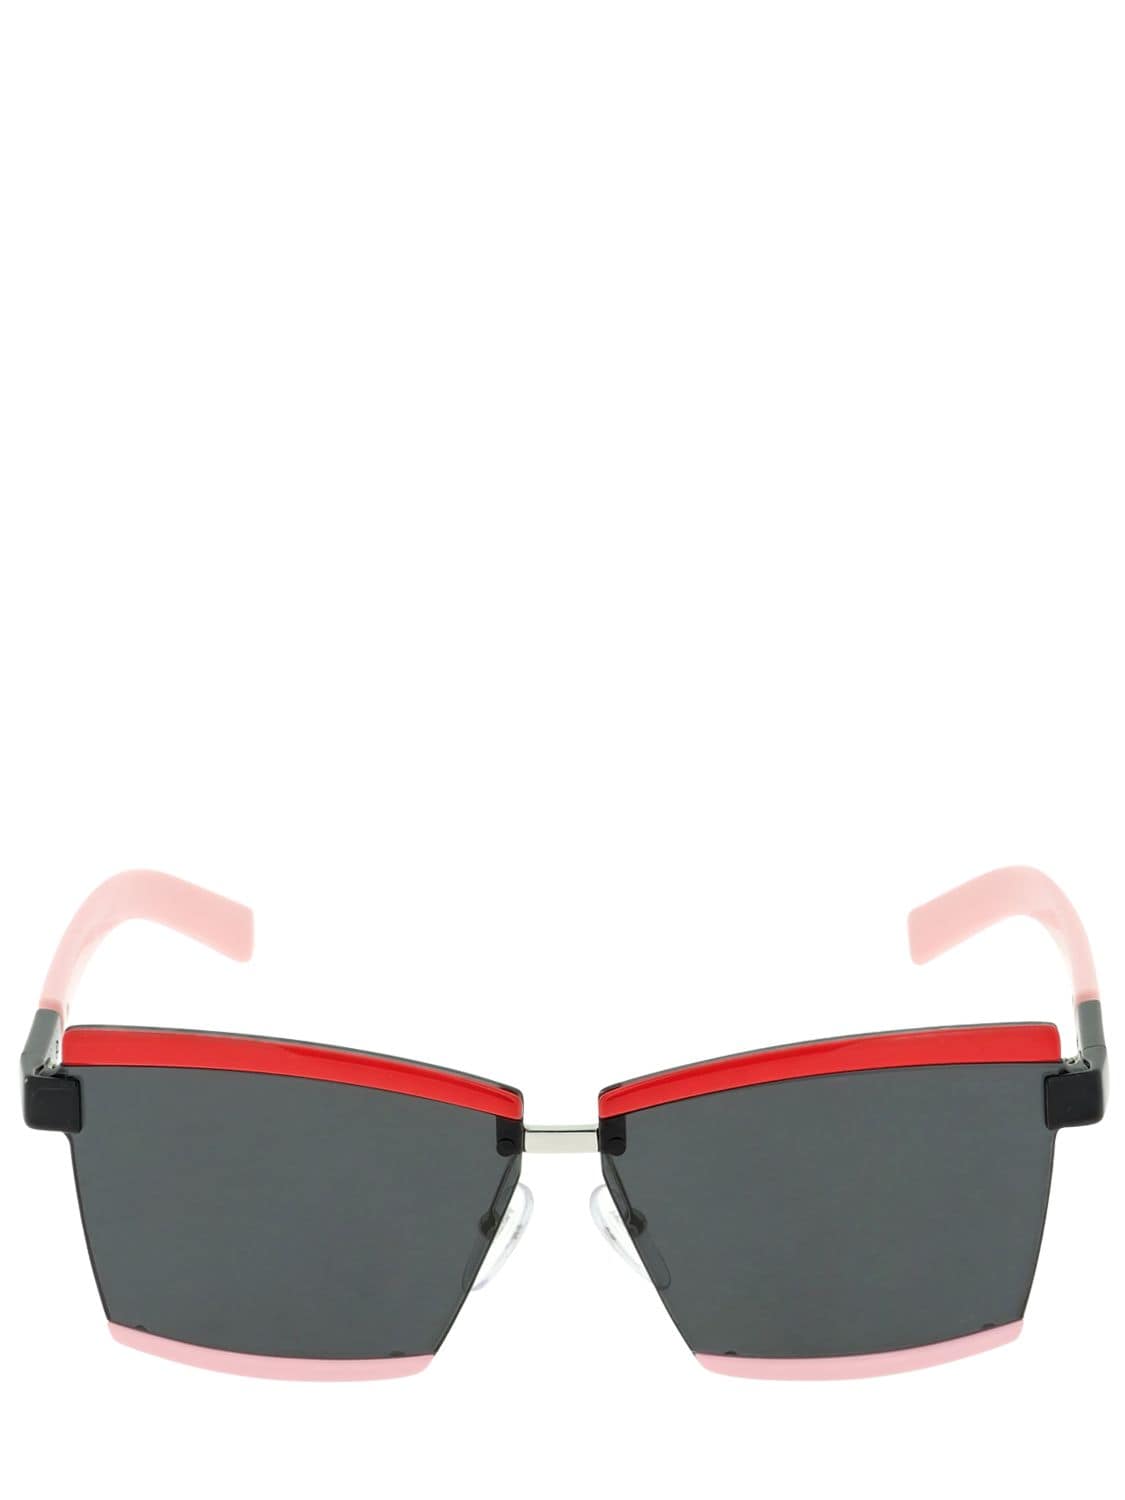 Prada Butterfly Metal Sunglasses In Red,pink